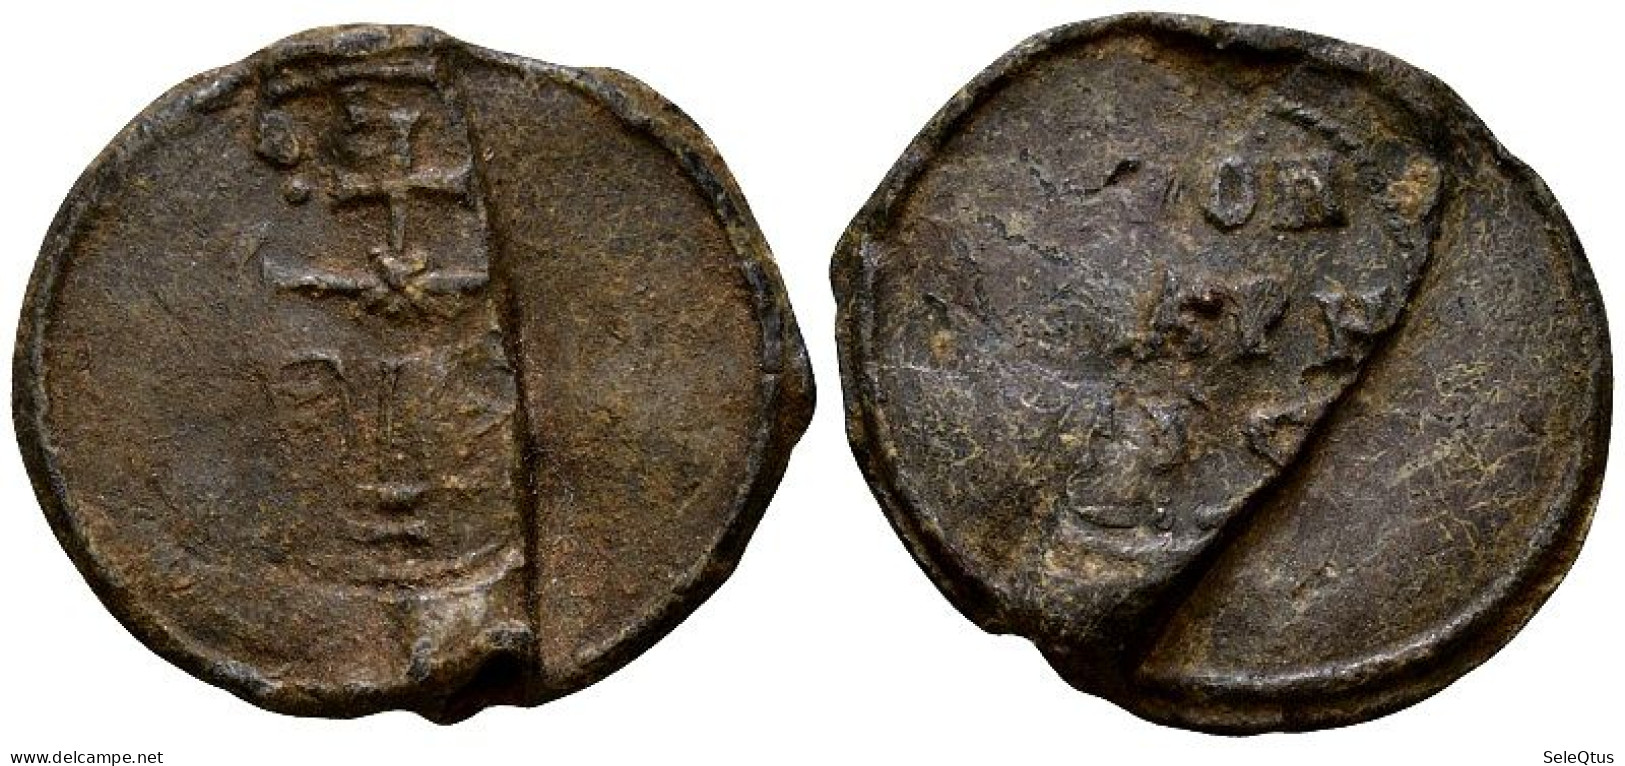 Sellos Antiguos - Ancient Seals (00130-007-1105) - Ancient Tools